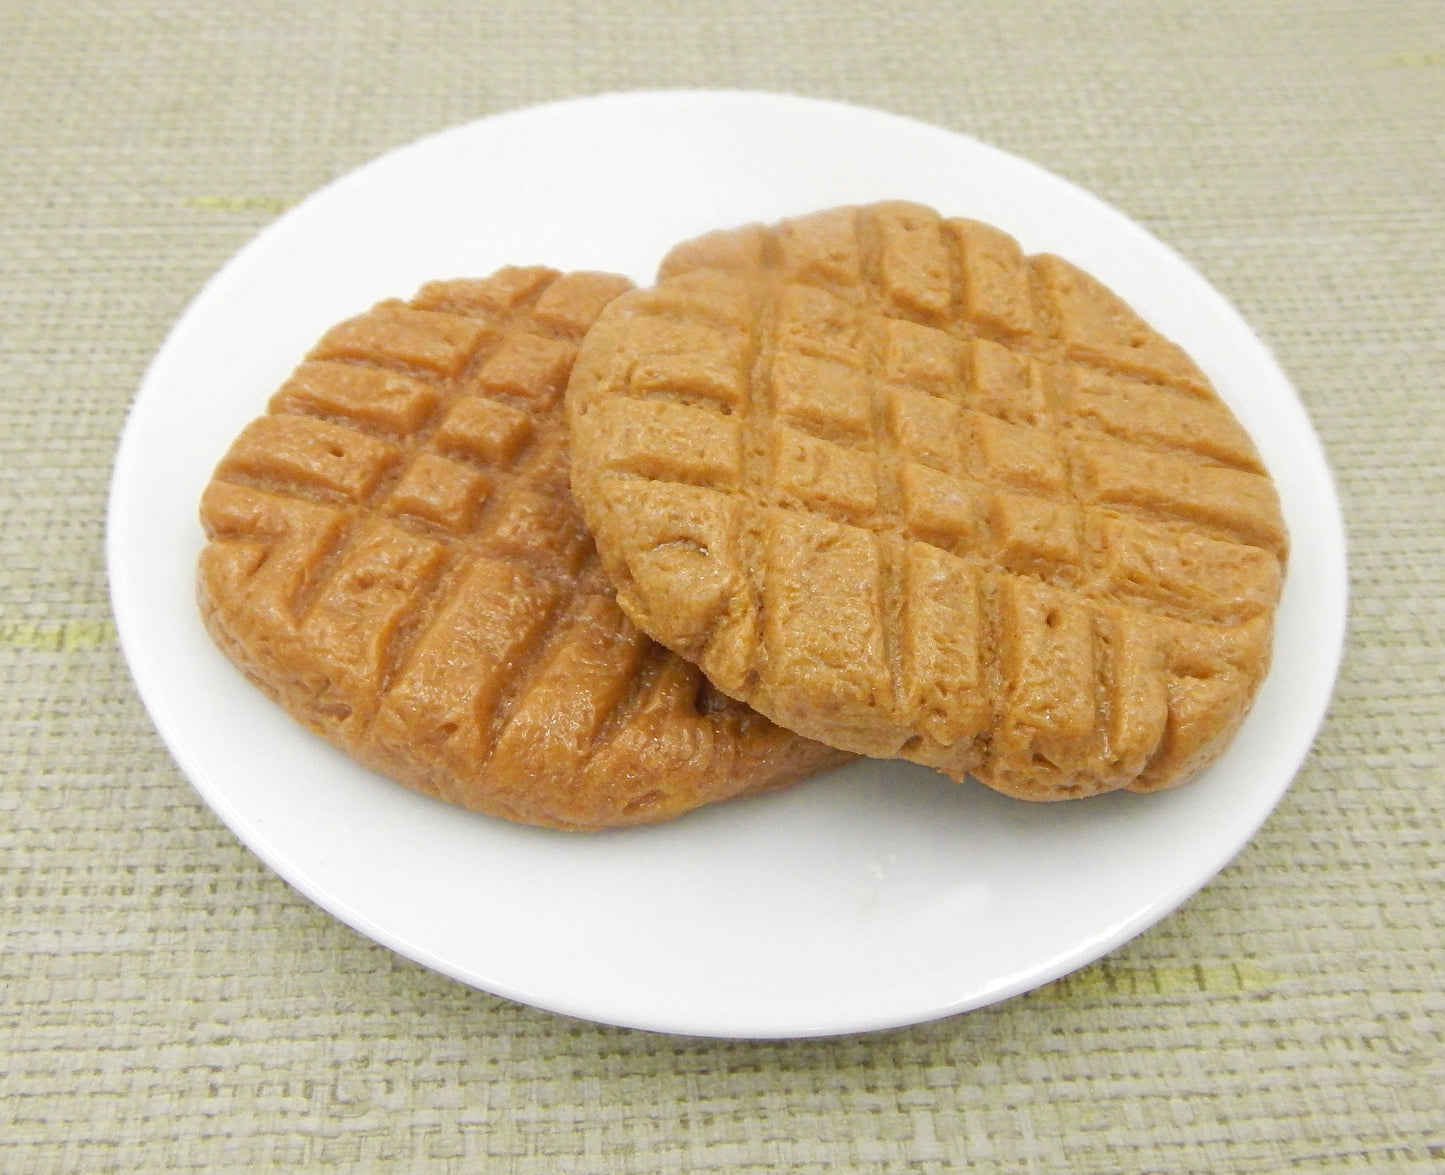 Glass Peanut Butter Cookie (76-102)